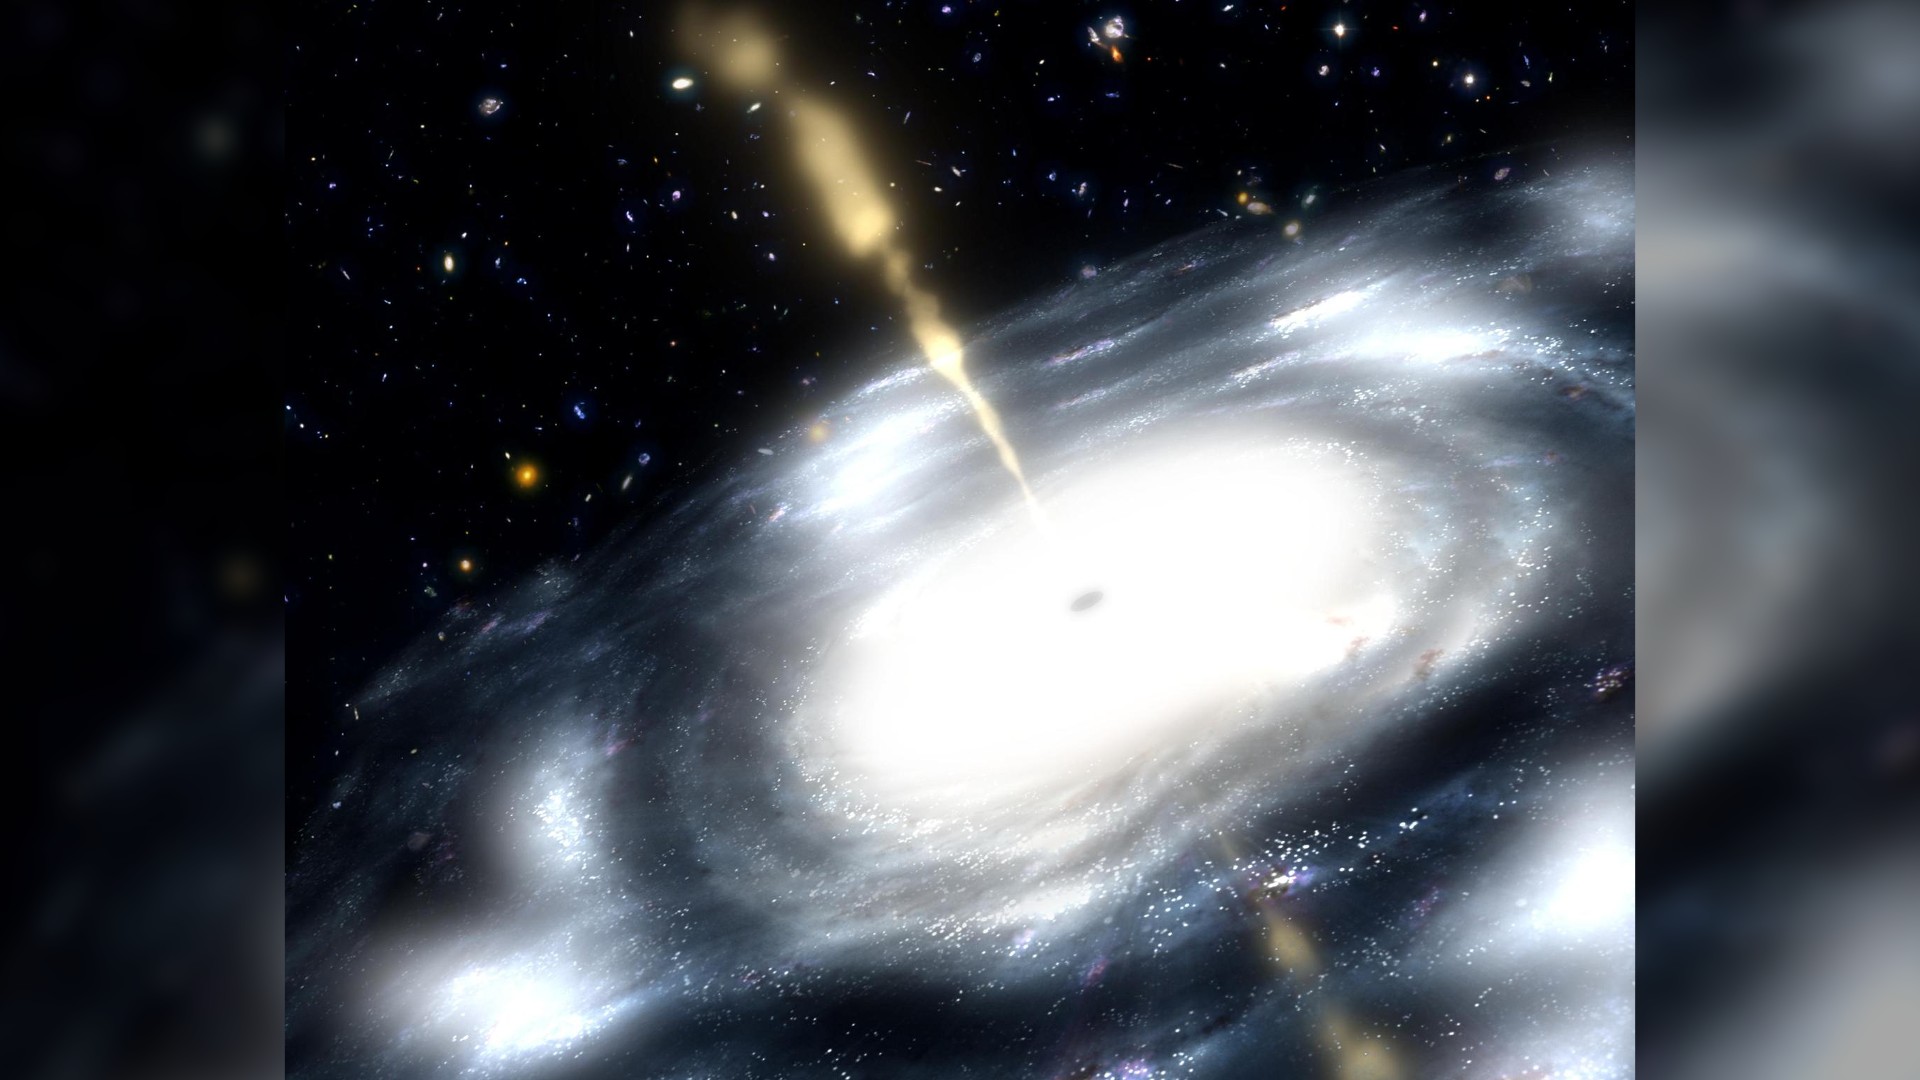 Godkendelse Sommerhus Kloster What's the biggest black hole in the universe? | Live Science